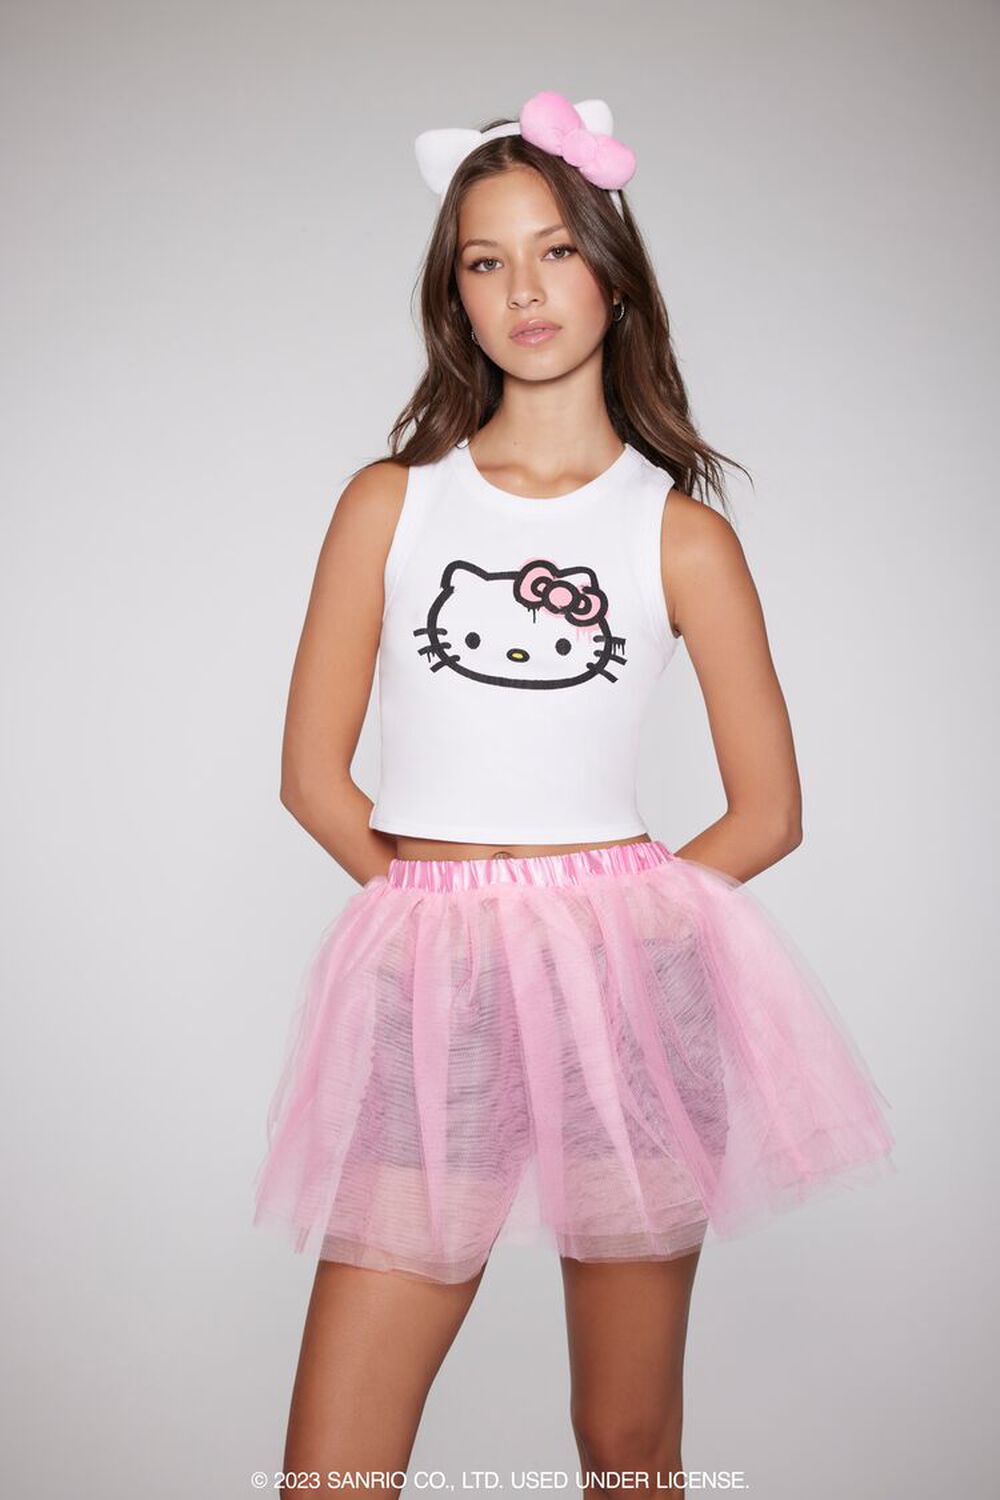 Майка Hello Kitty, комплект с юбкой-пачкой и повязкой на голову Forever 21, розовый